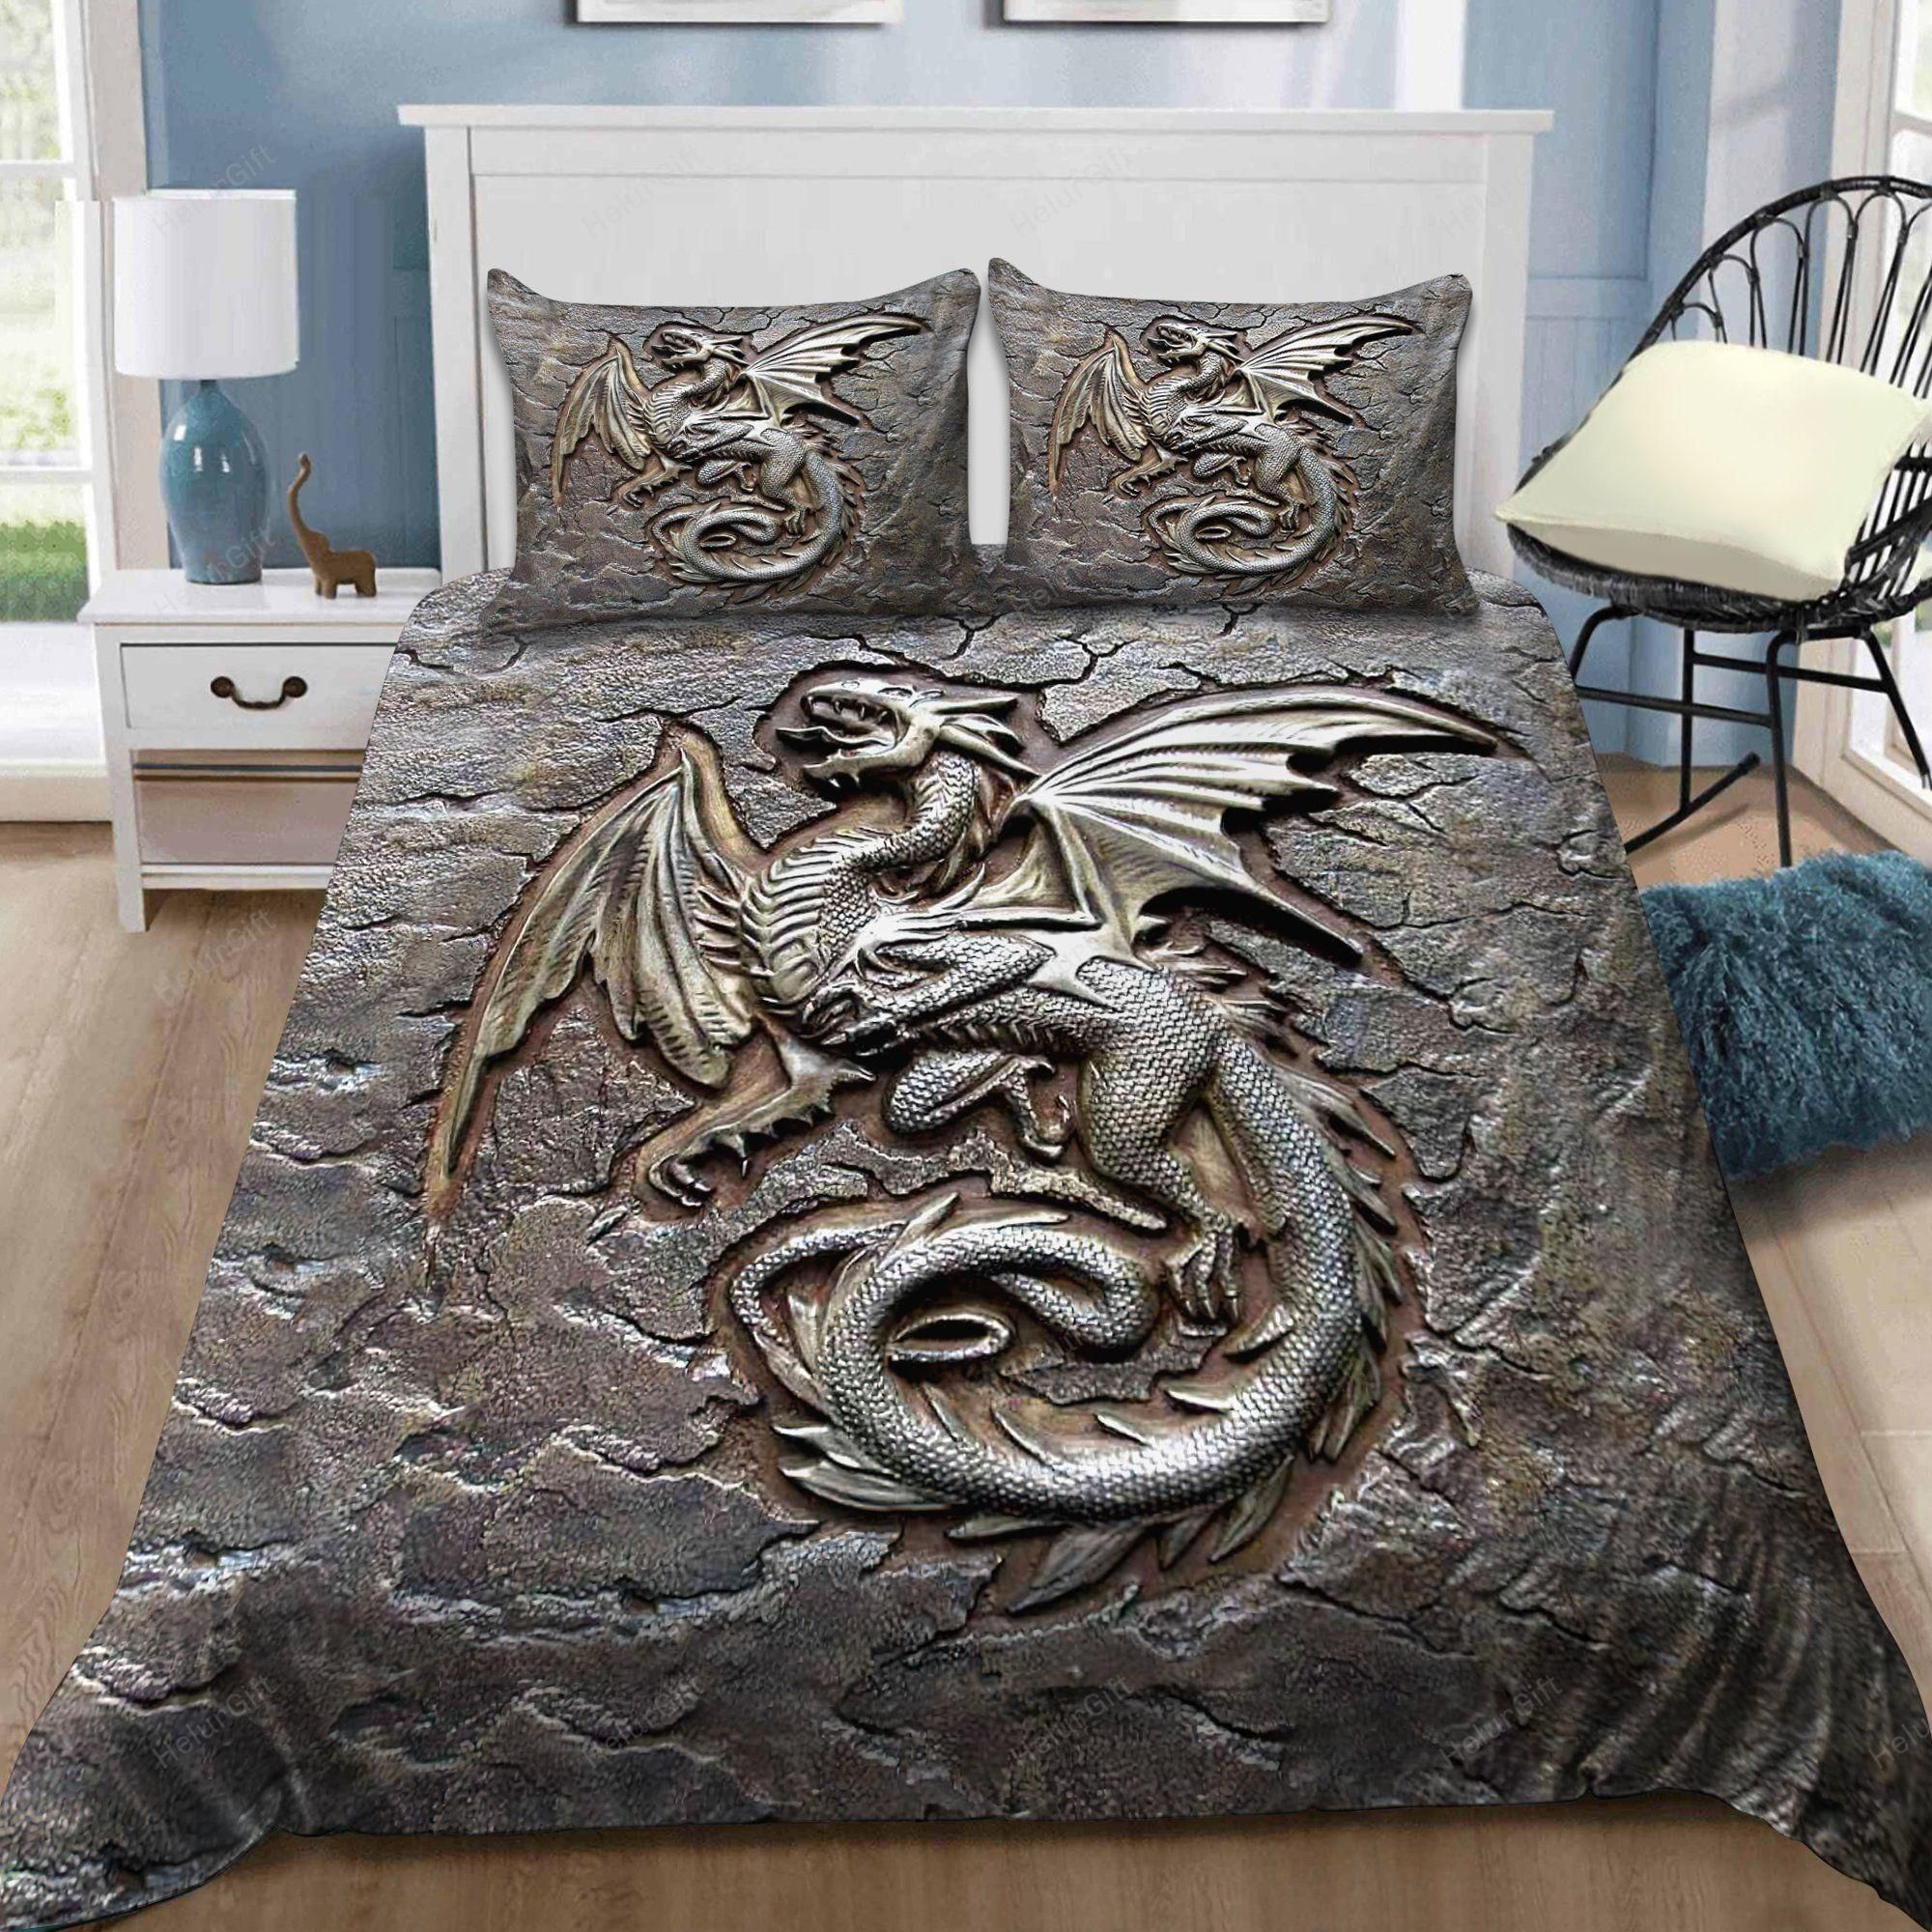 Dragons Bedding Set